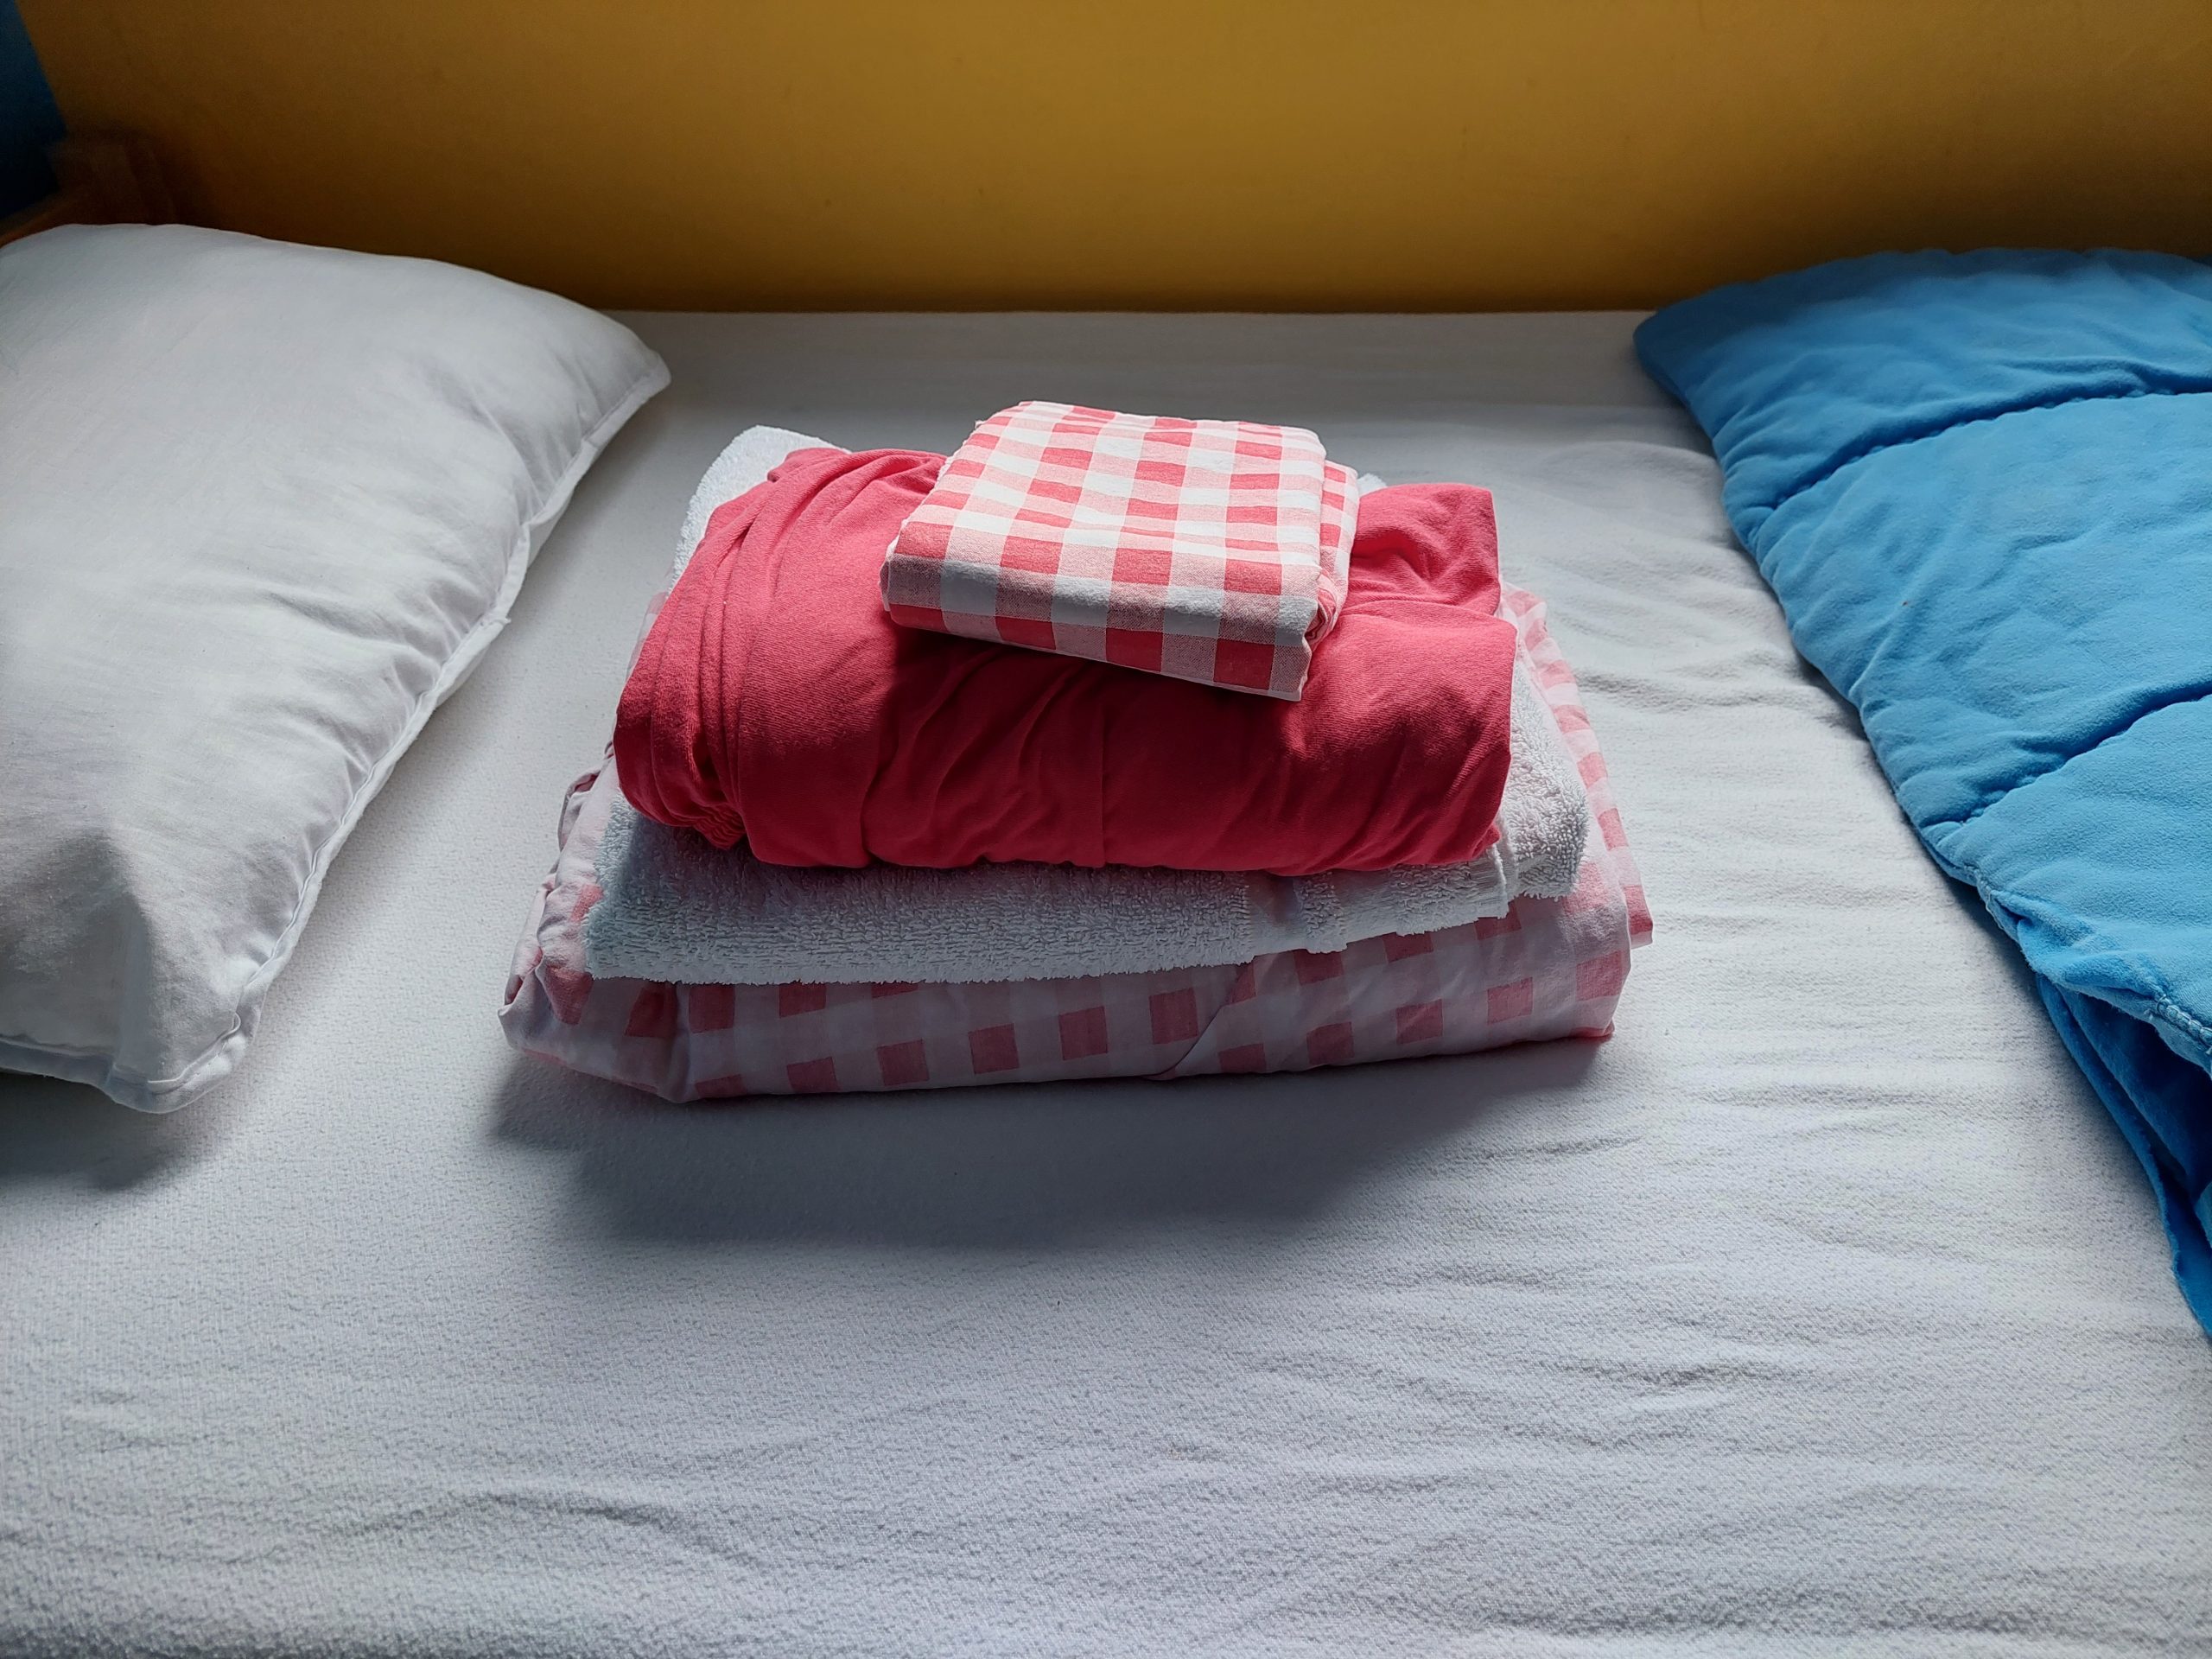 free bedsheets / towel